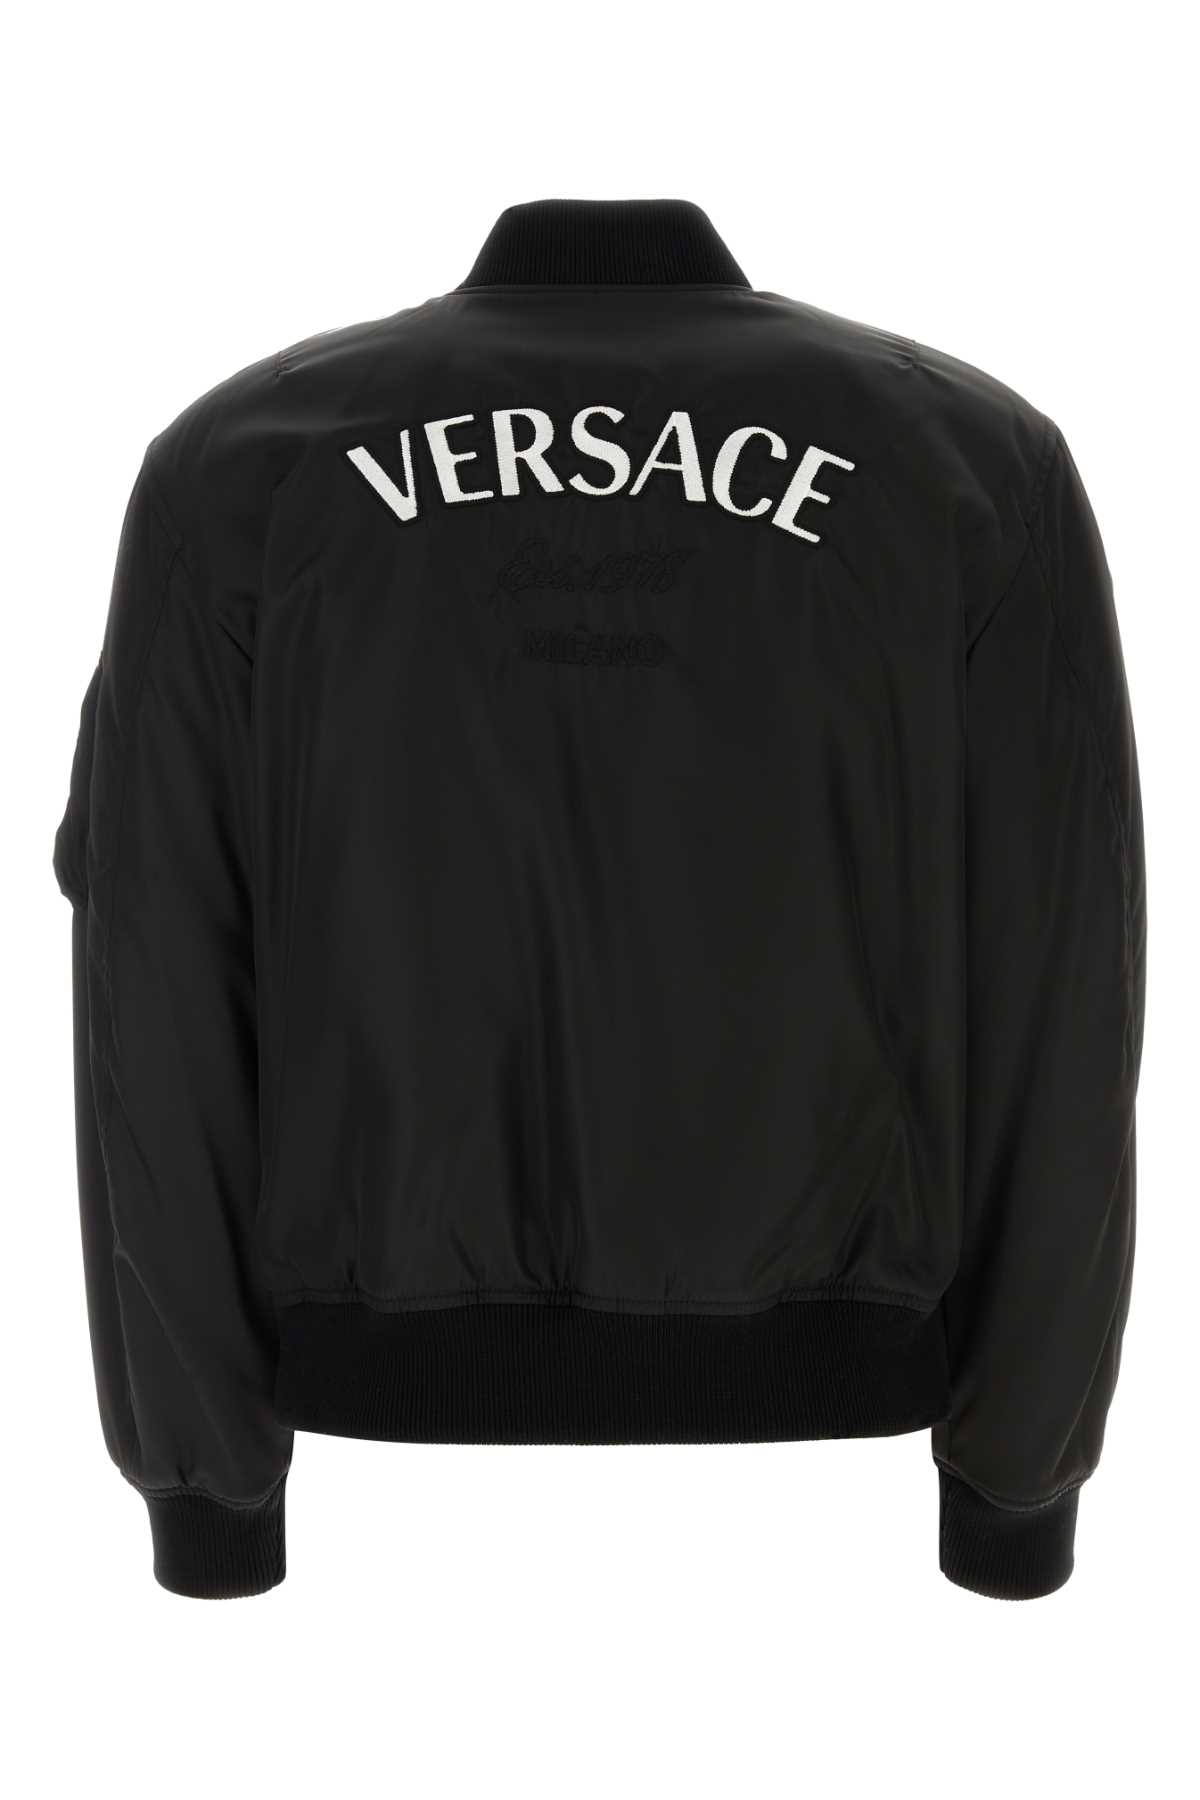 Versace Black Nylon Padded Bomber Jacket